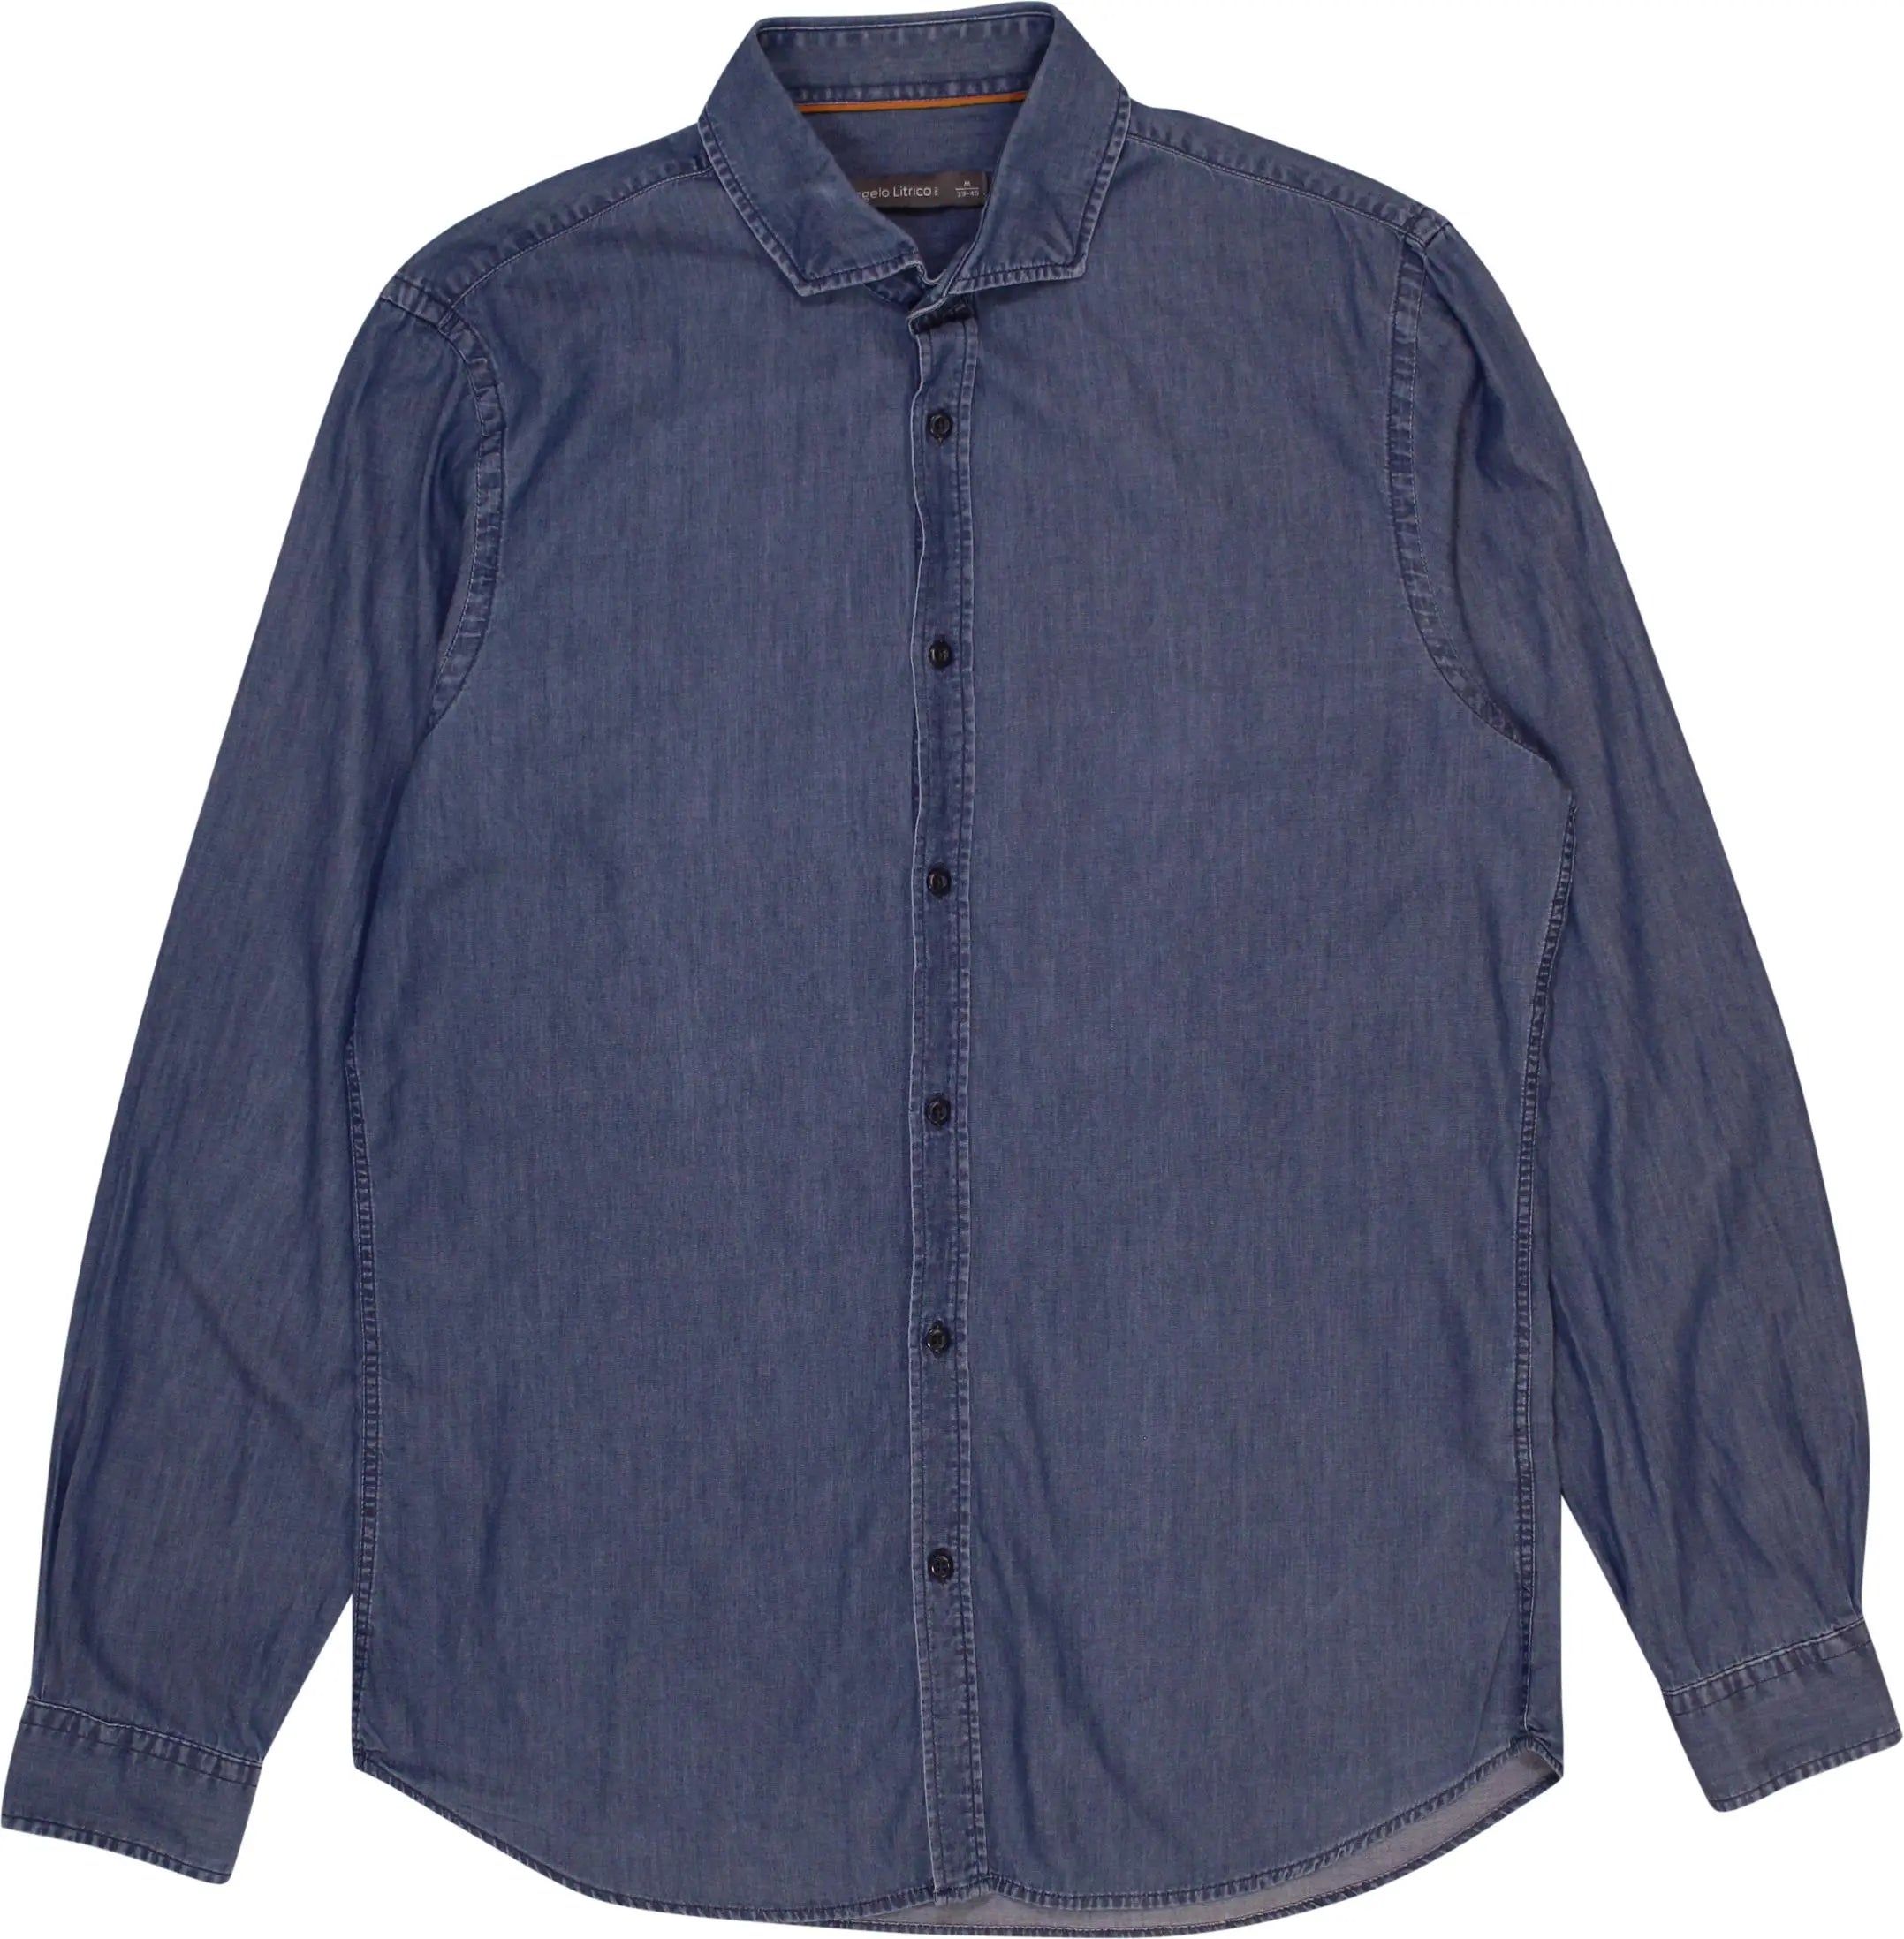 C&A - Slim Fit Denim Shirt- ThriftTale.com - Vintage and second handclothing